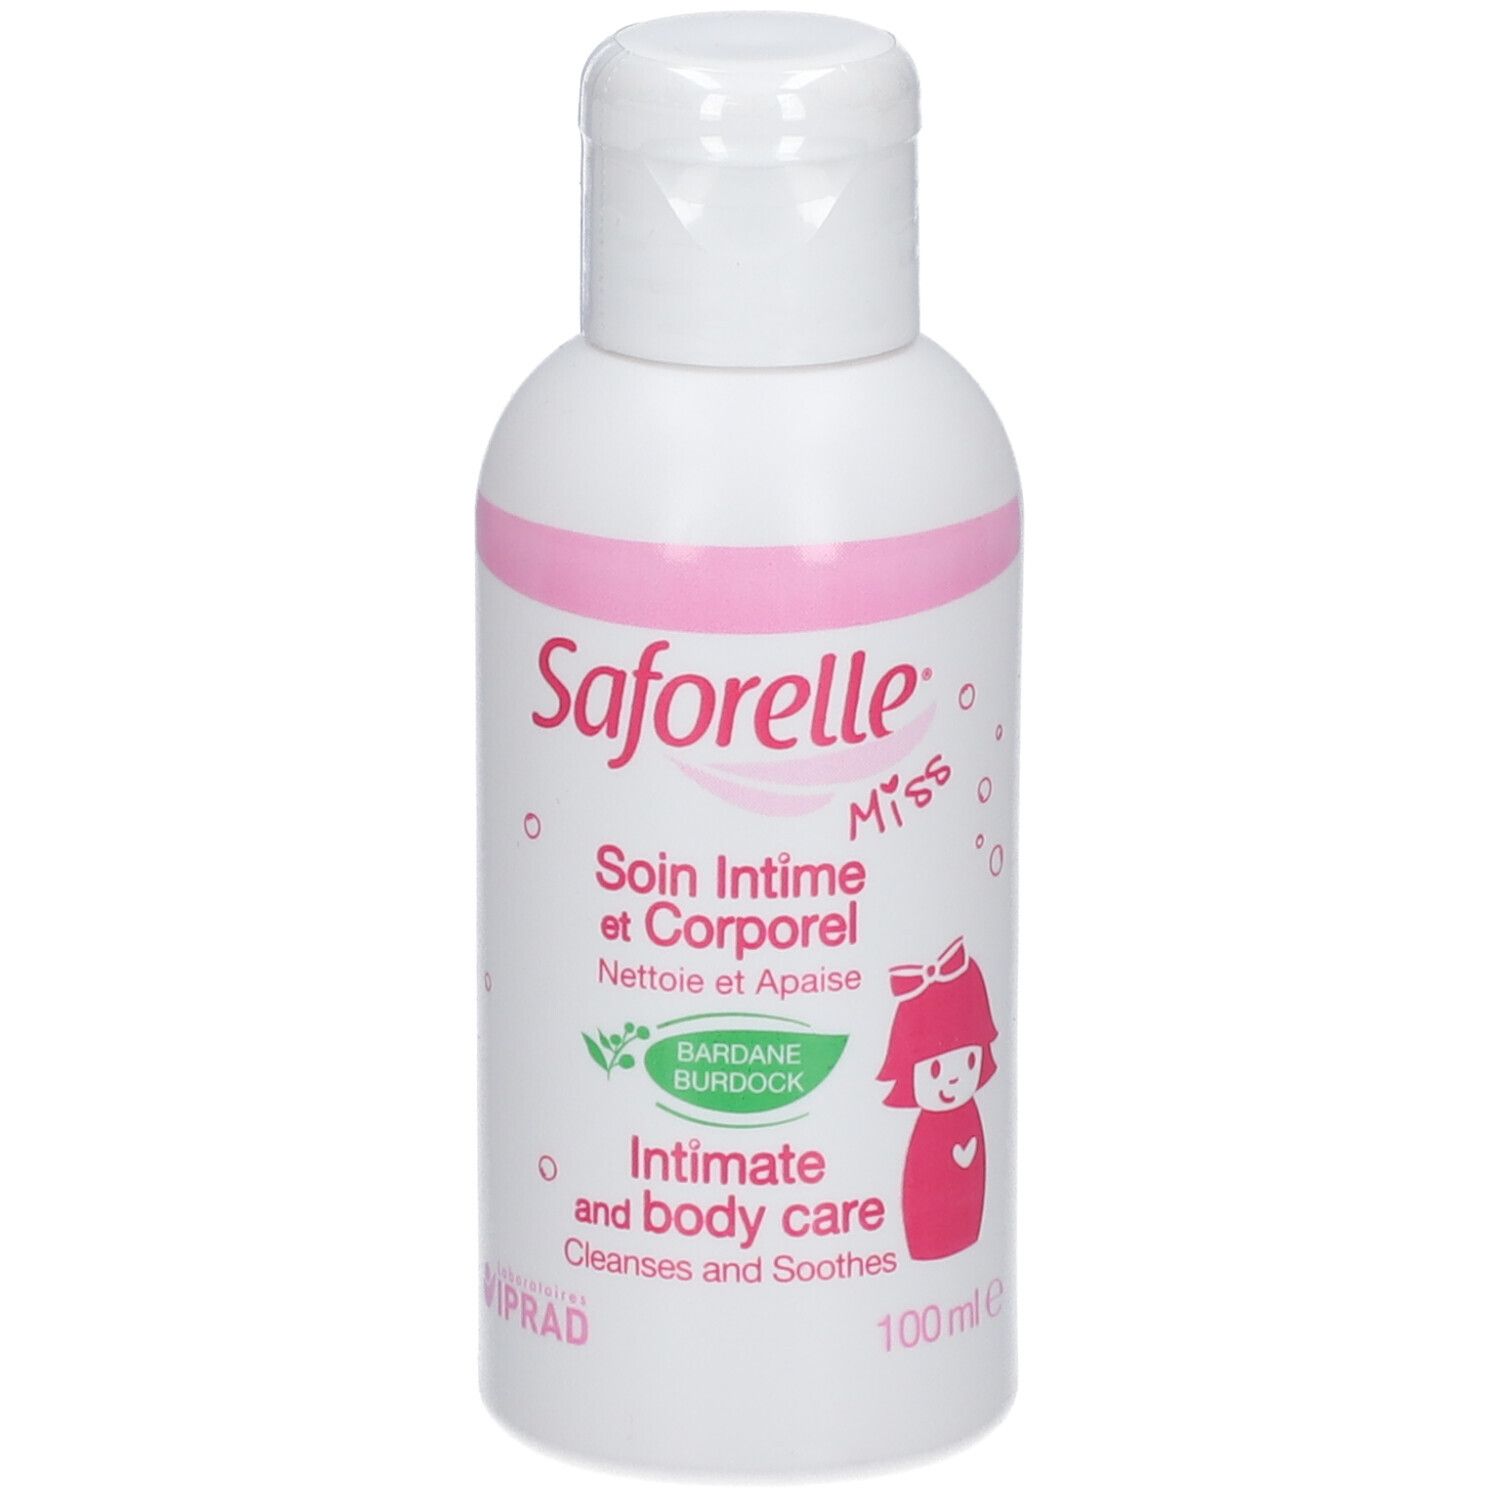 Saforelle® Miss Soin Intime et Corporel ml lotion(s)